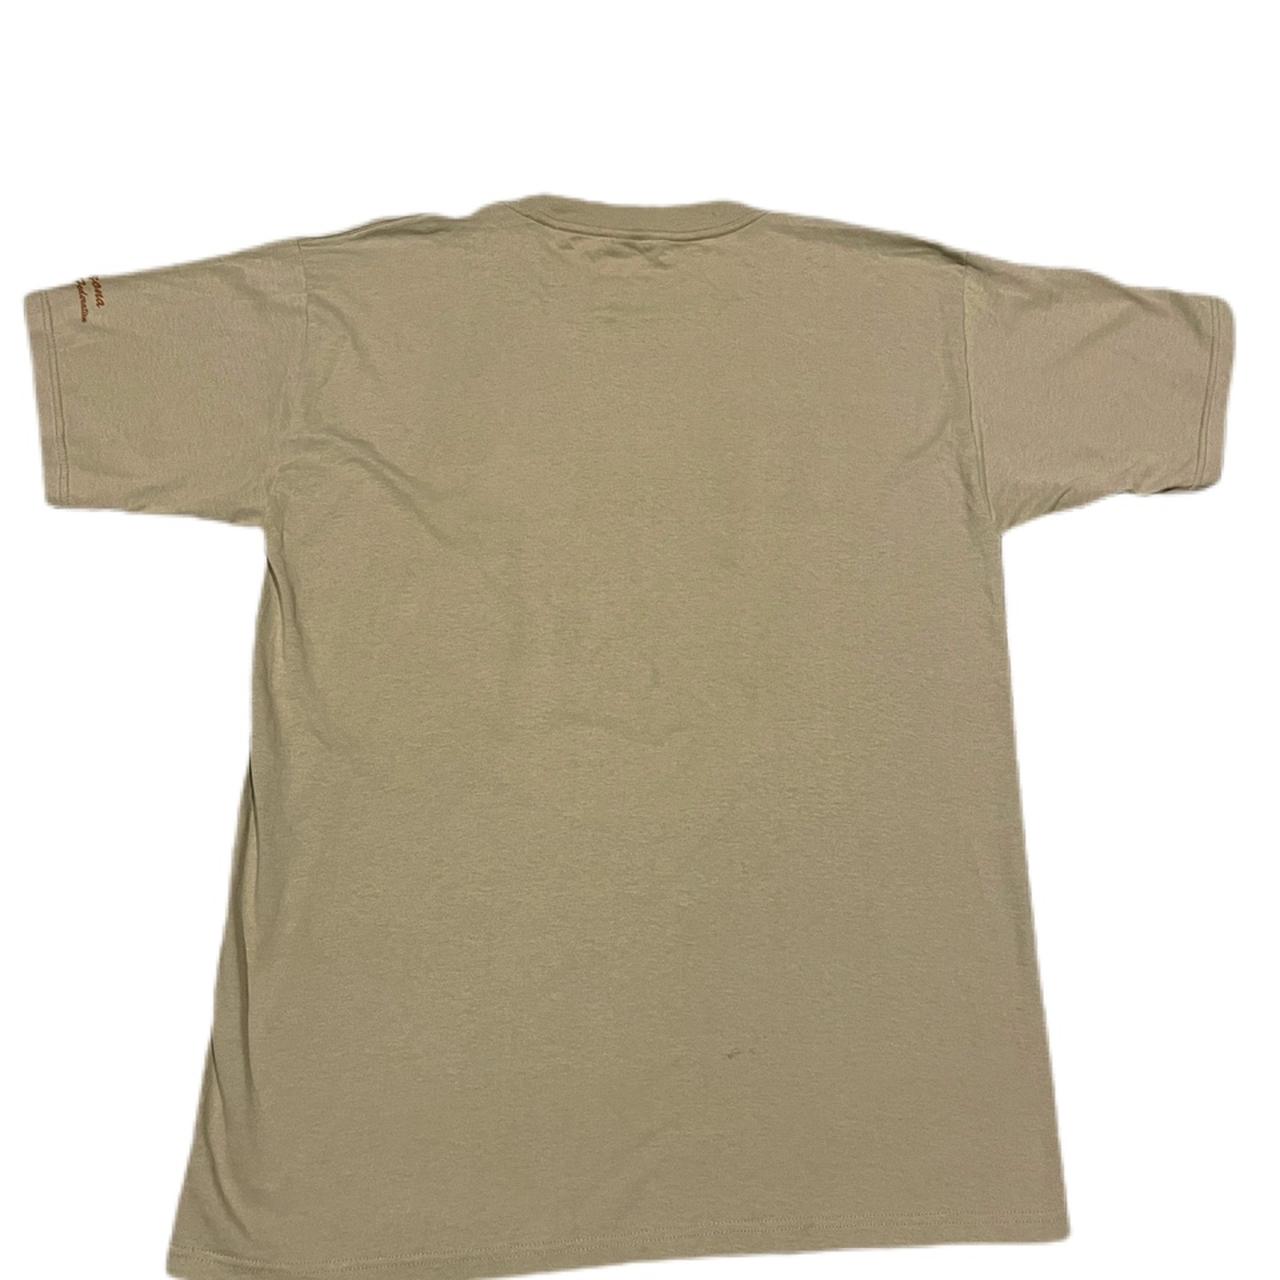 Wild Men's Tan and Brown T-shirt (2)